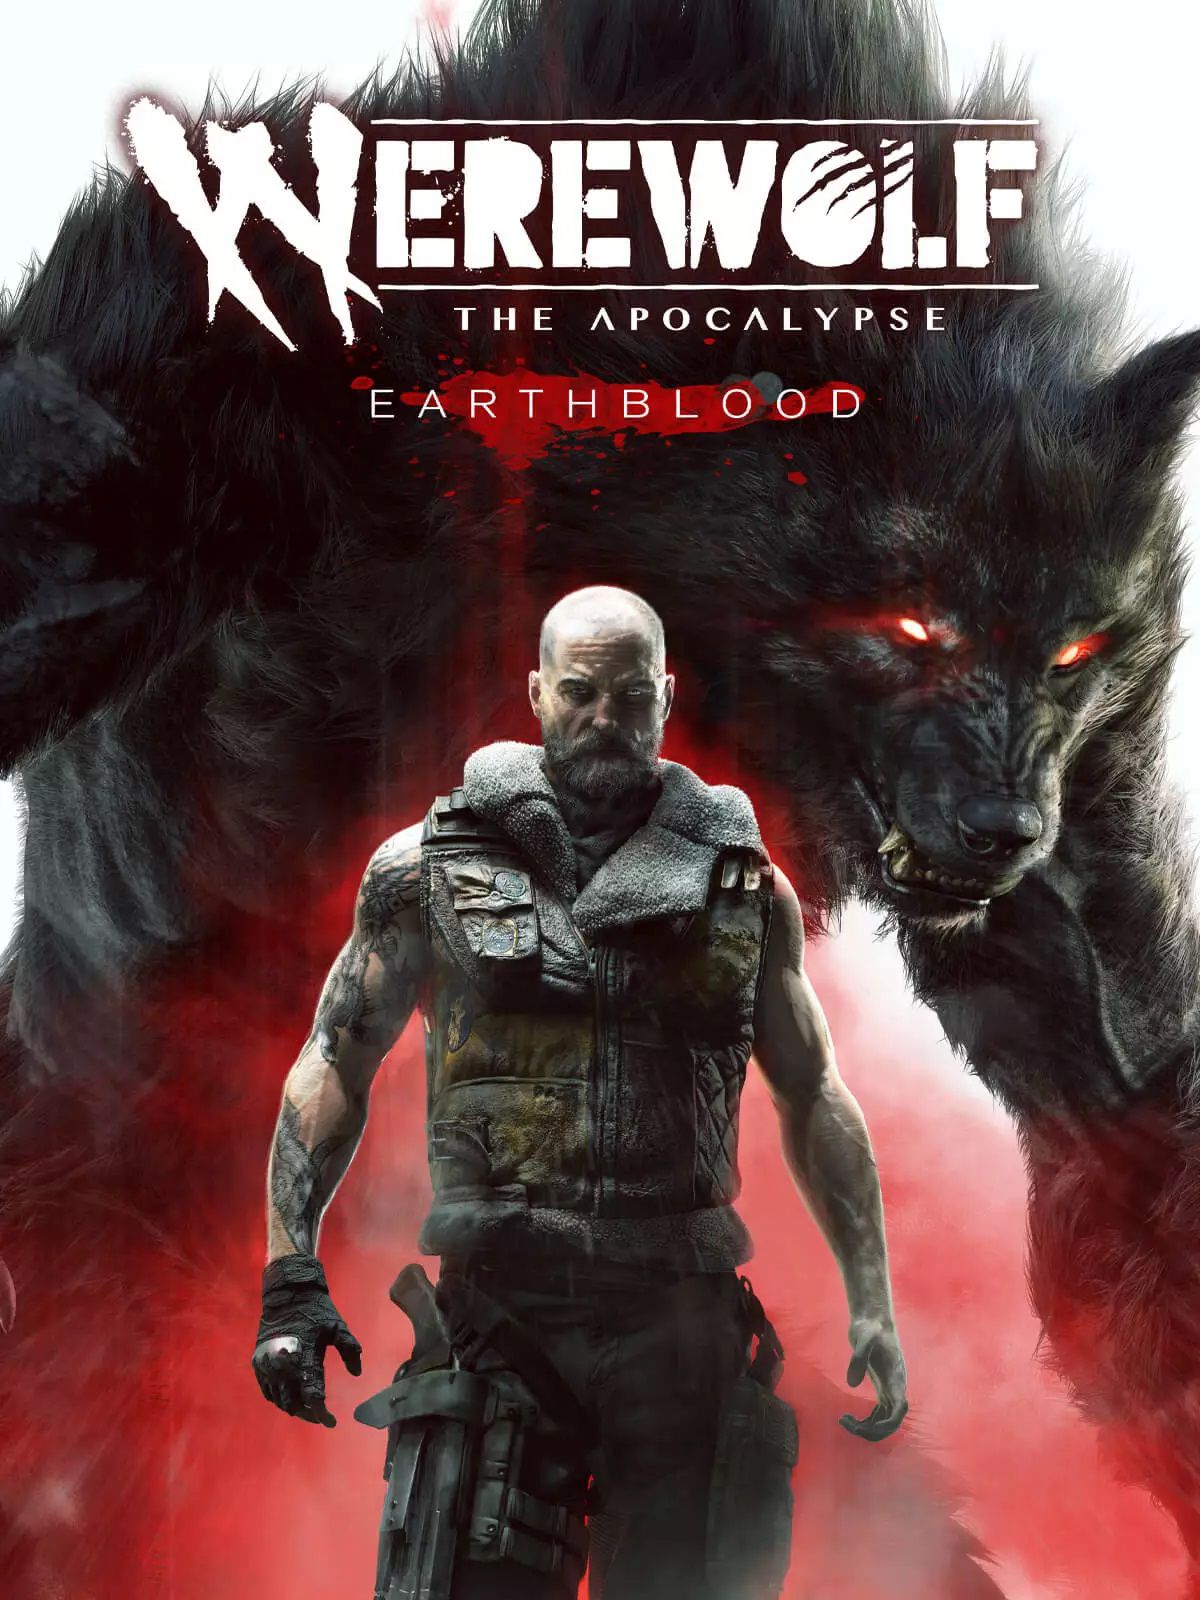 Voir Film Werewolf: The Apocalypse – Earthblood (2021)  - Jeu vidéo streaming VF gratuit complet